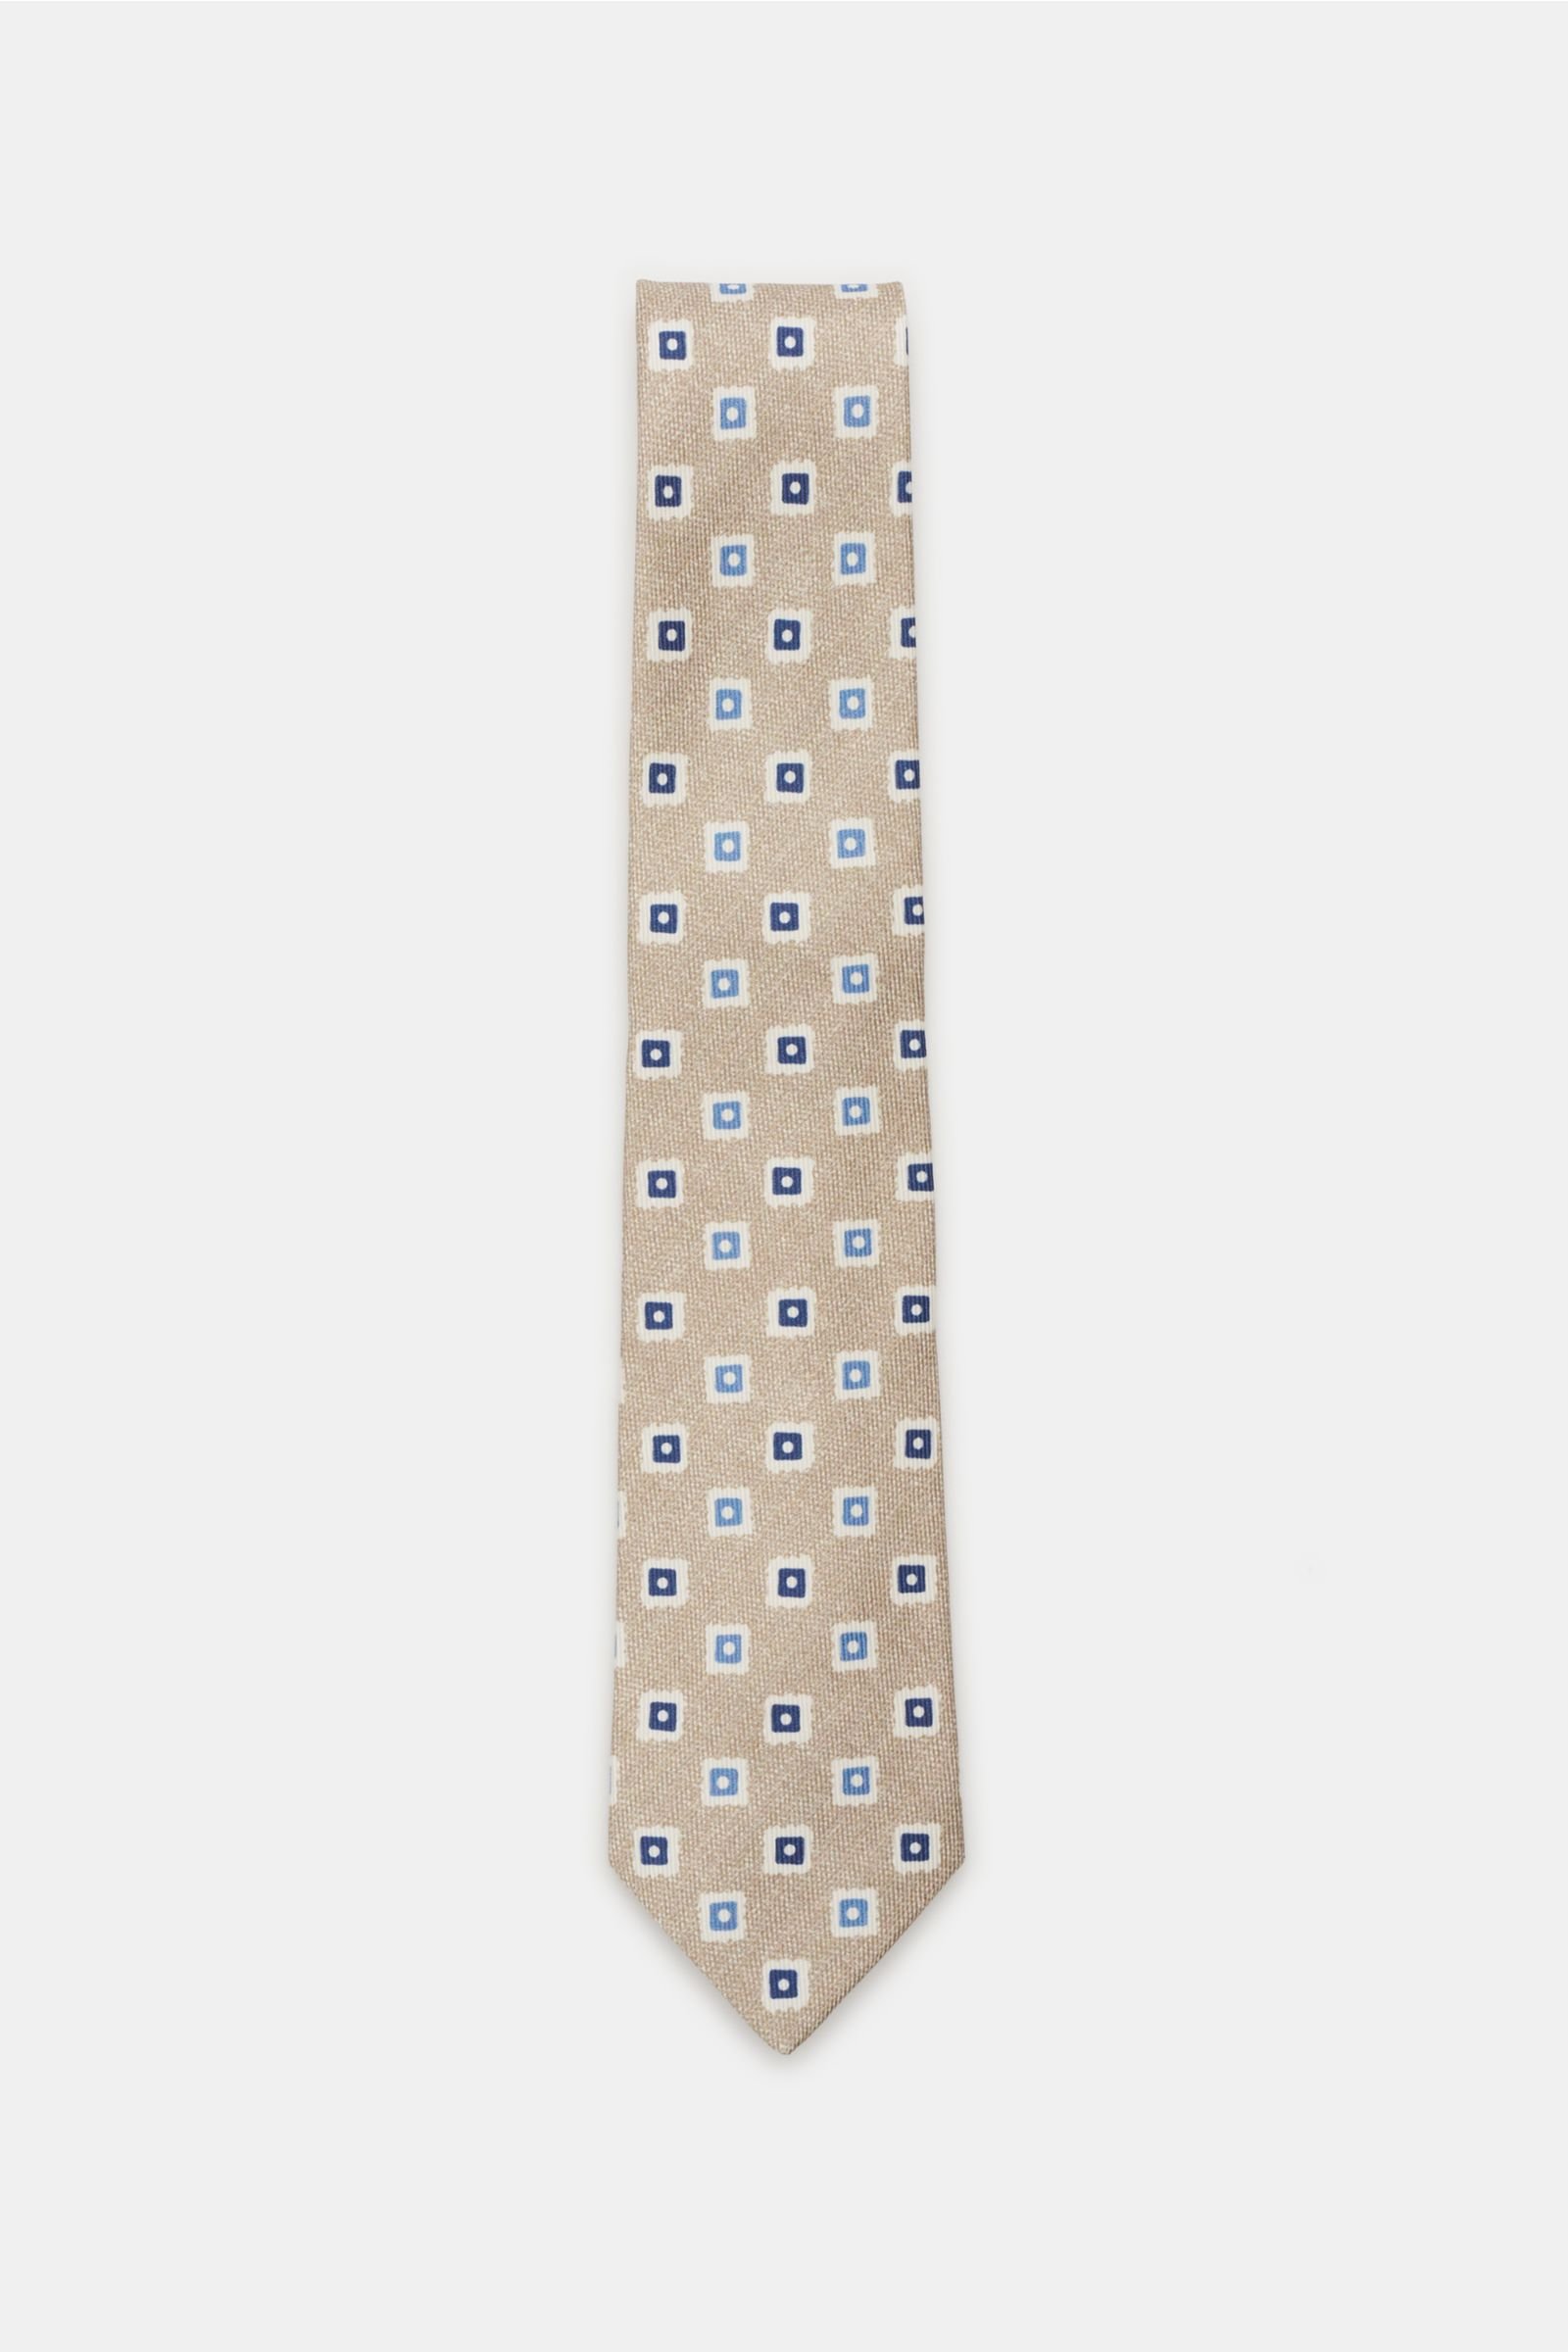 Tie khaki patterned